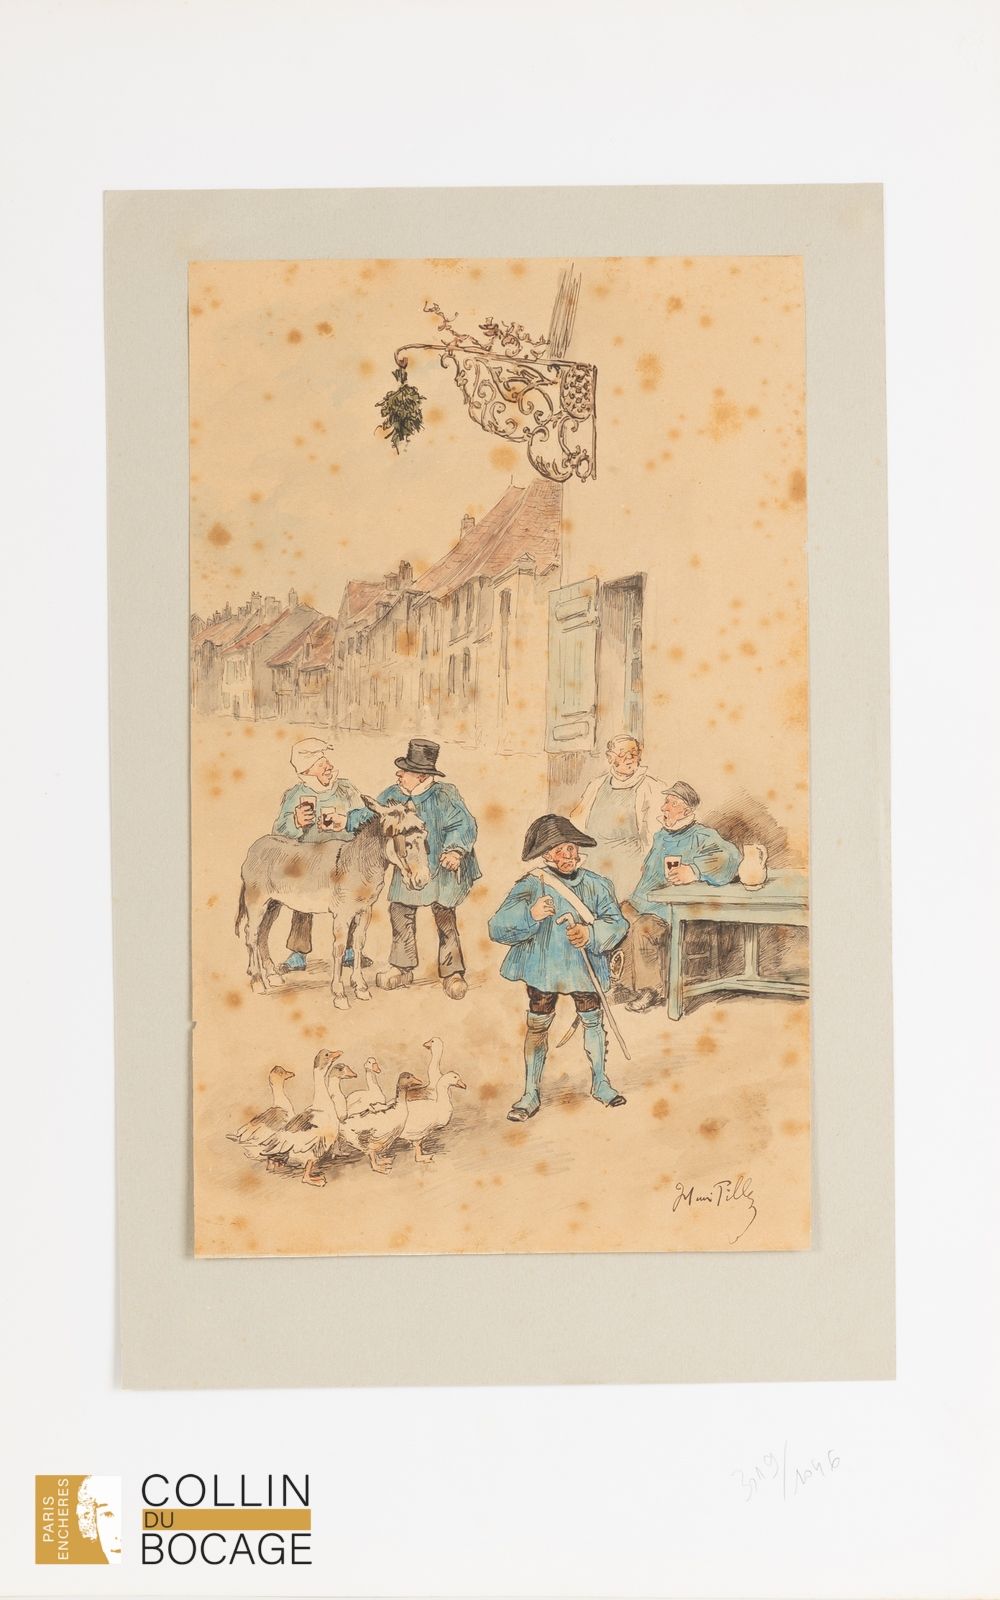 Null 夏尔-亨利-皮尔（1844-1897）
酒馆里的外省民兵
纸上钢笔和水彩
19 世纪下半叶
点蚀
30.5 x 19 厘米